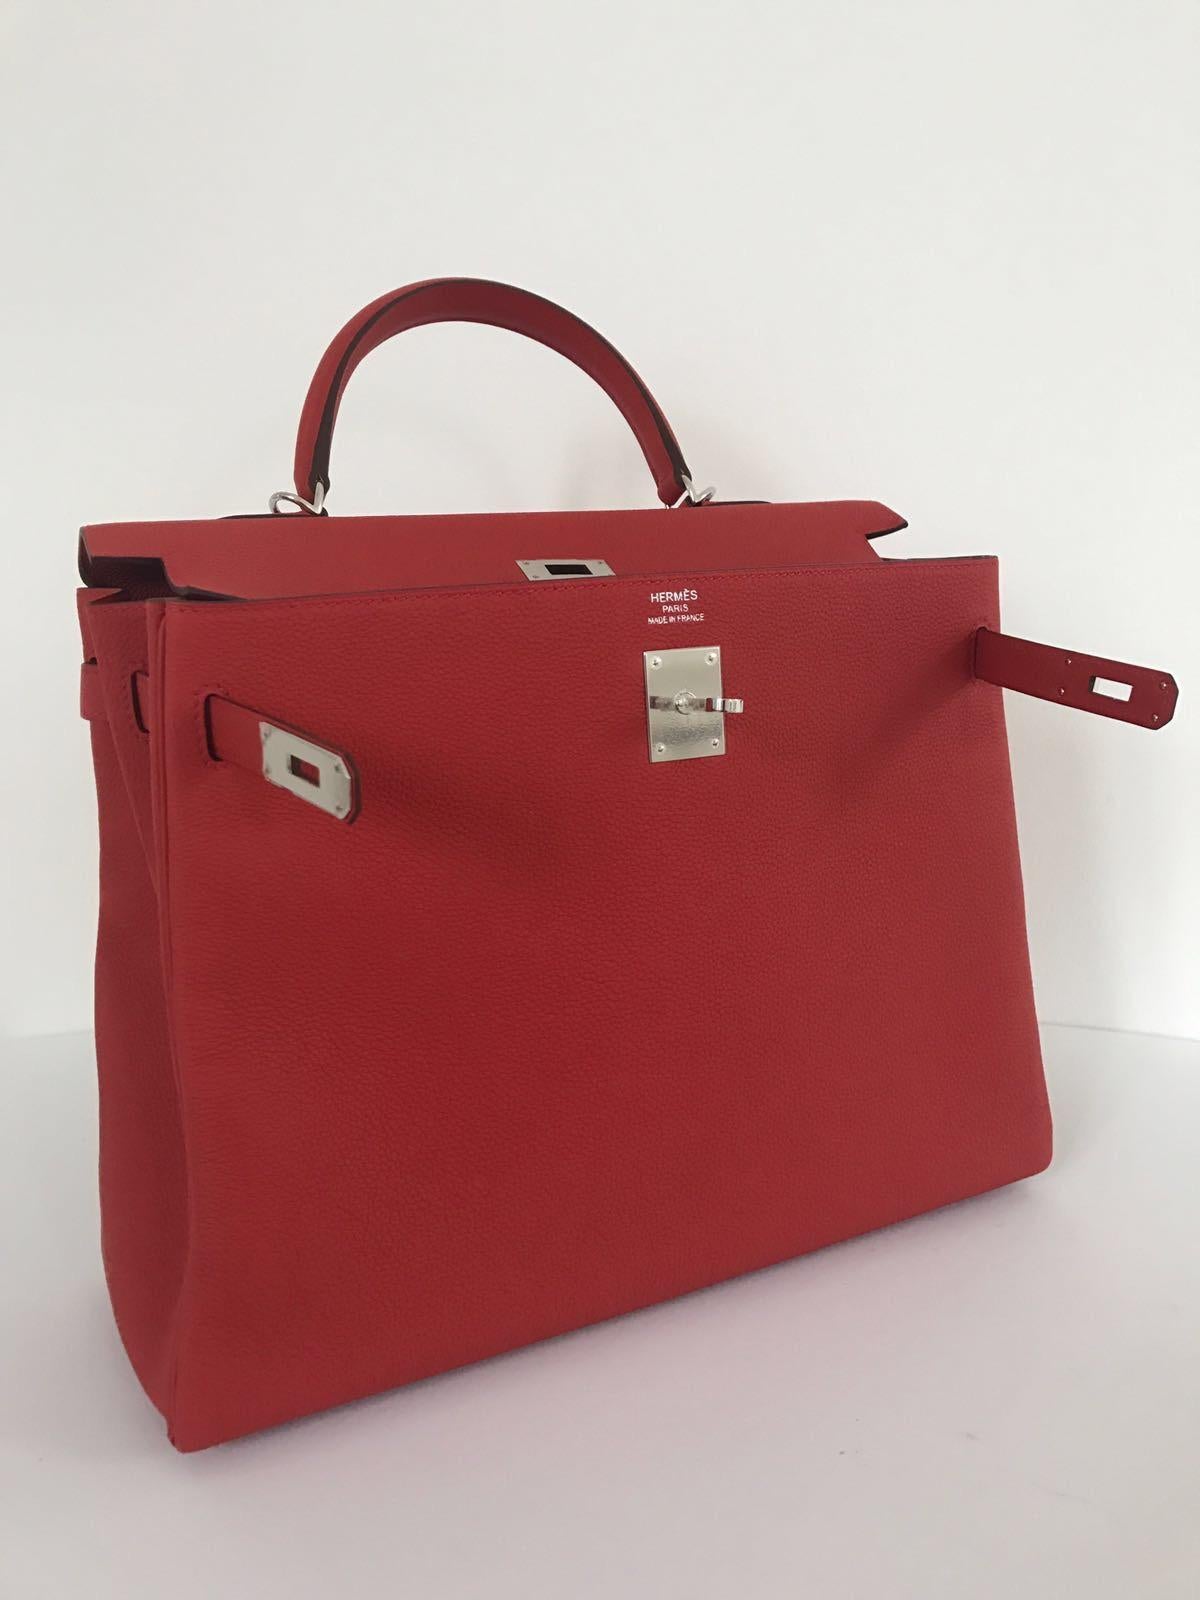 Hermes Geranium Togo Kelly 35cm Bag For Sale 1